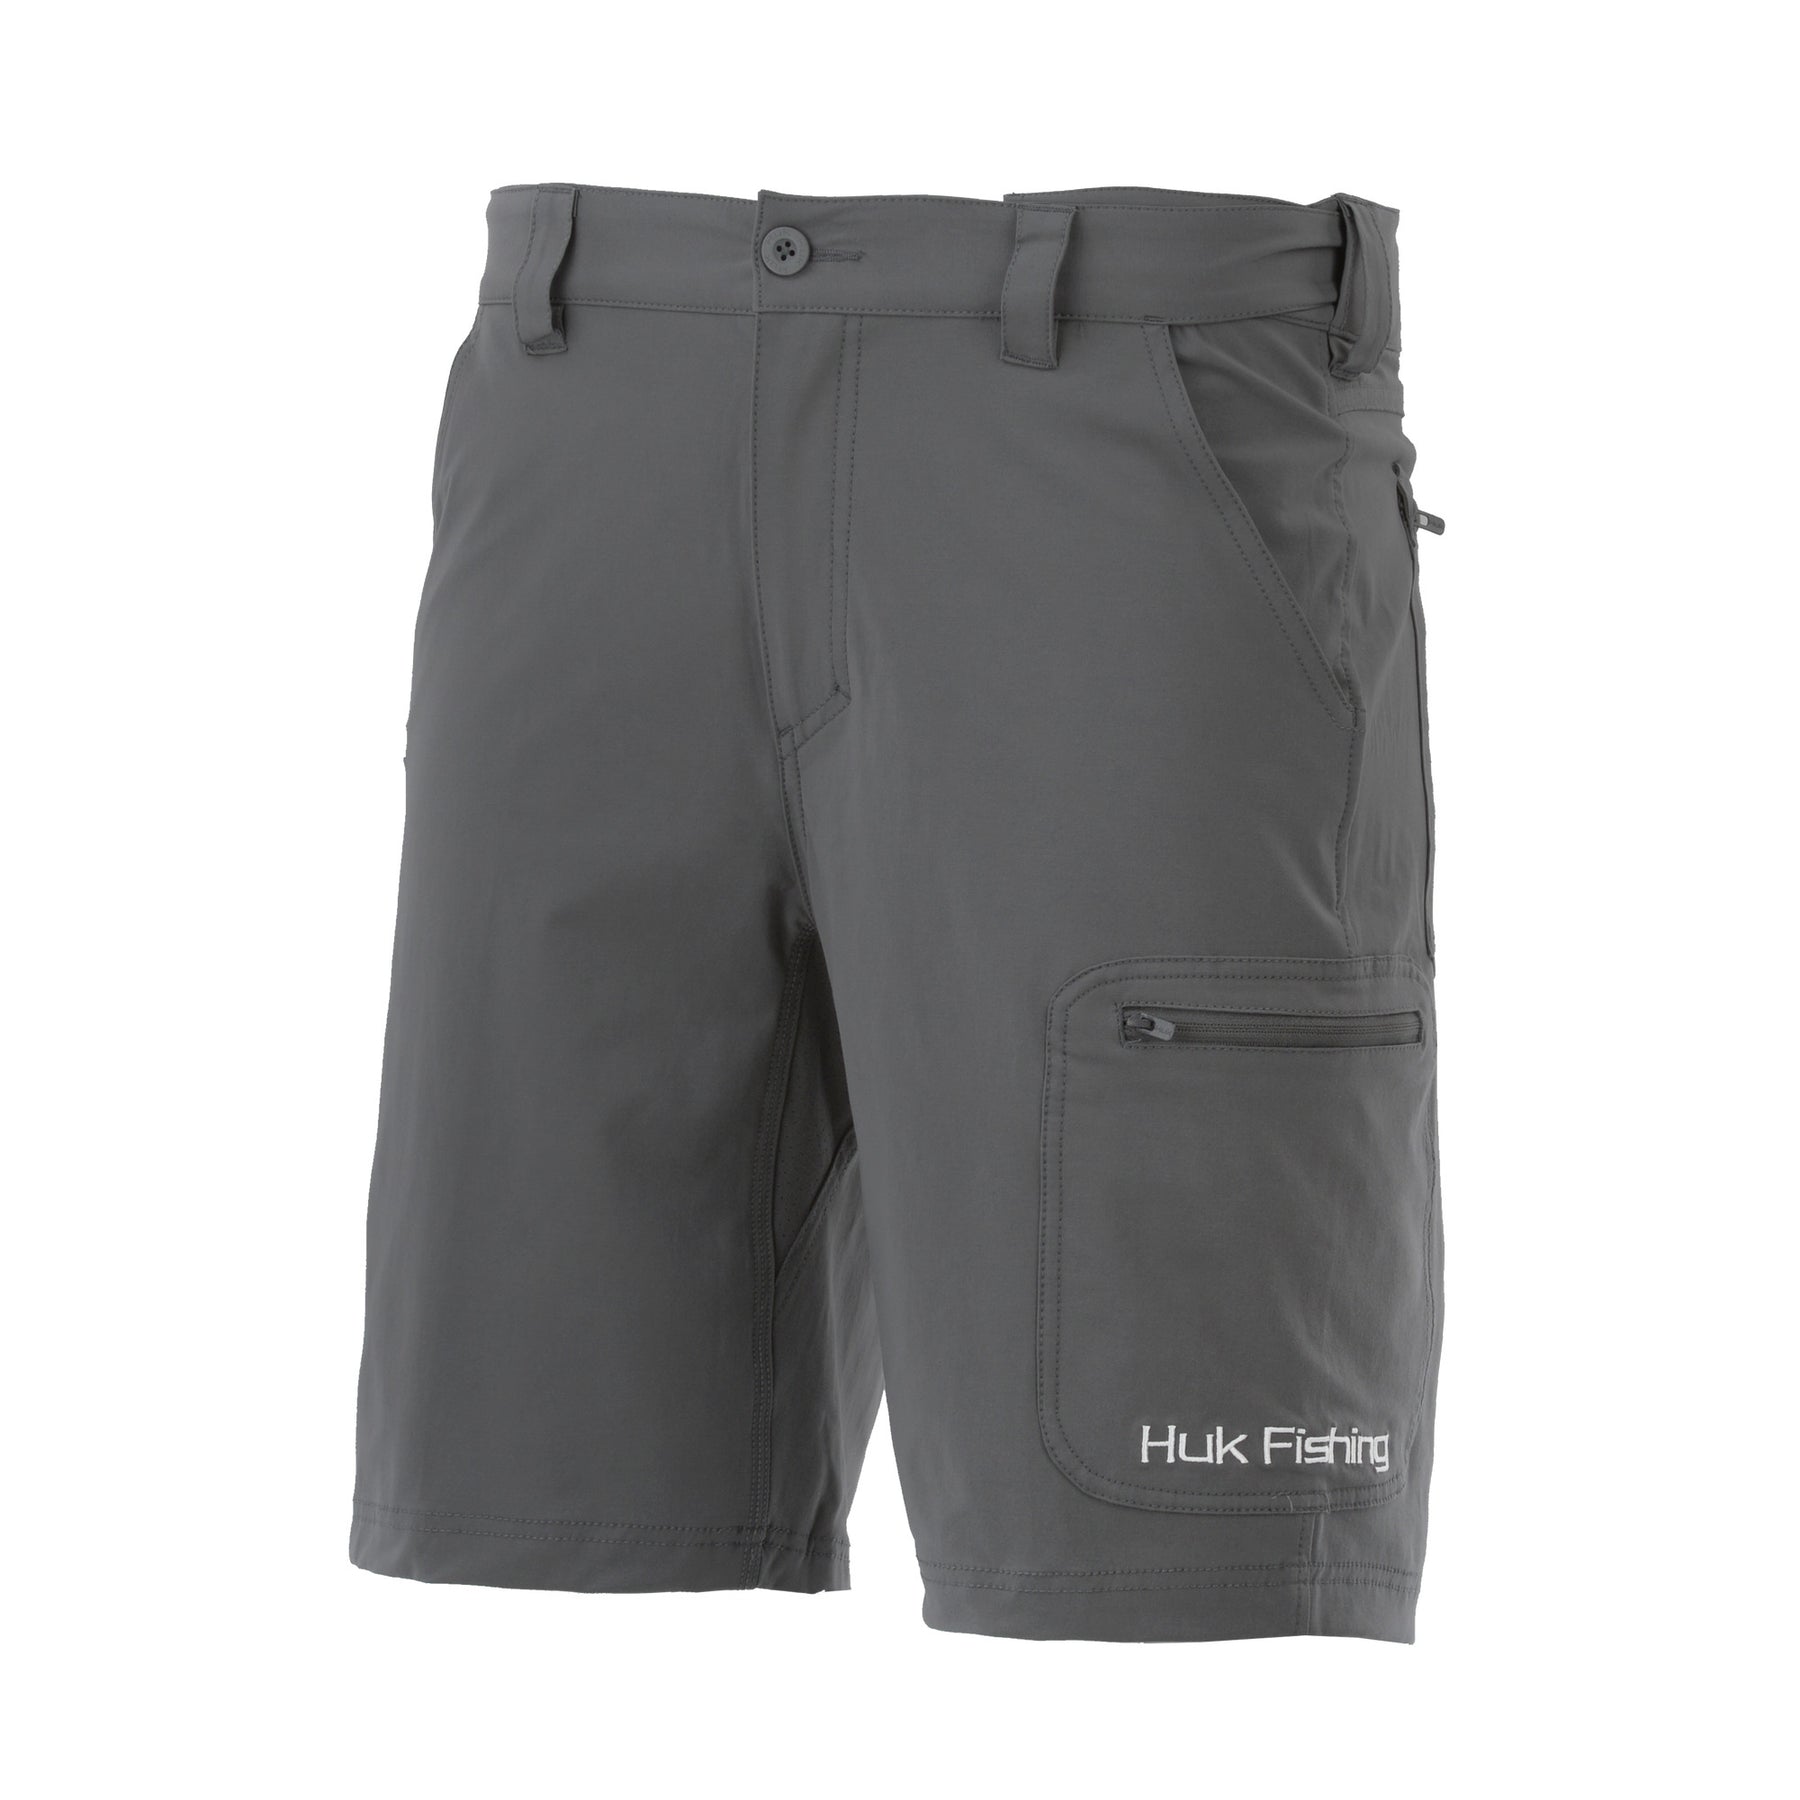 Huk Men's Next Level 10.5 Shorts